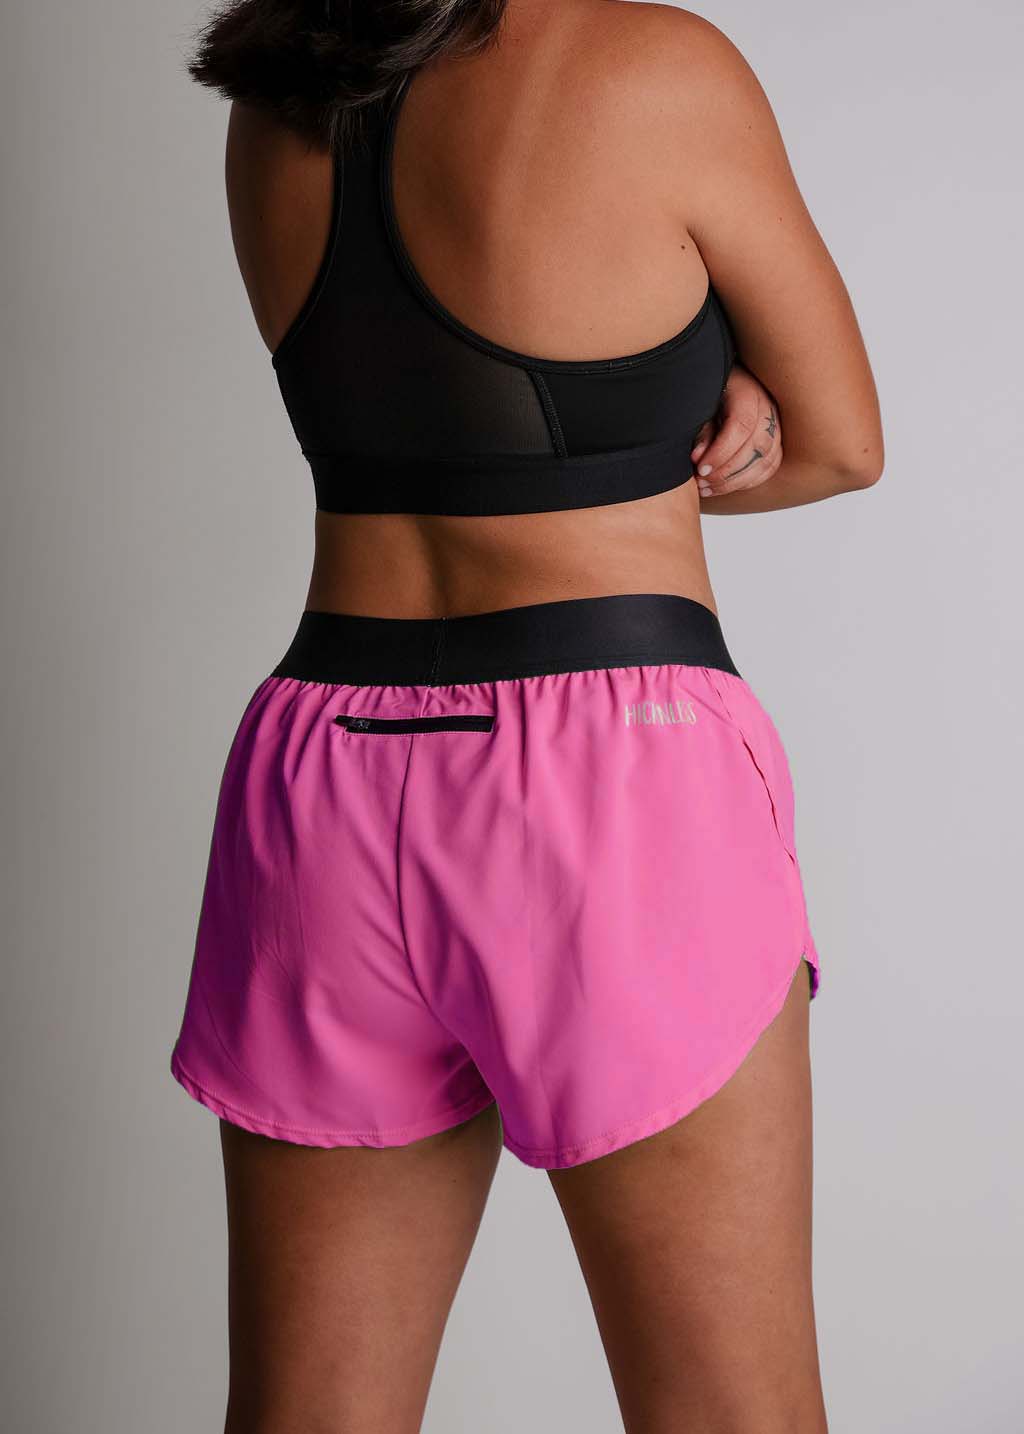 lululemon athletica Pink Pull-on Shorts for Women